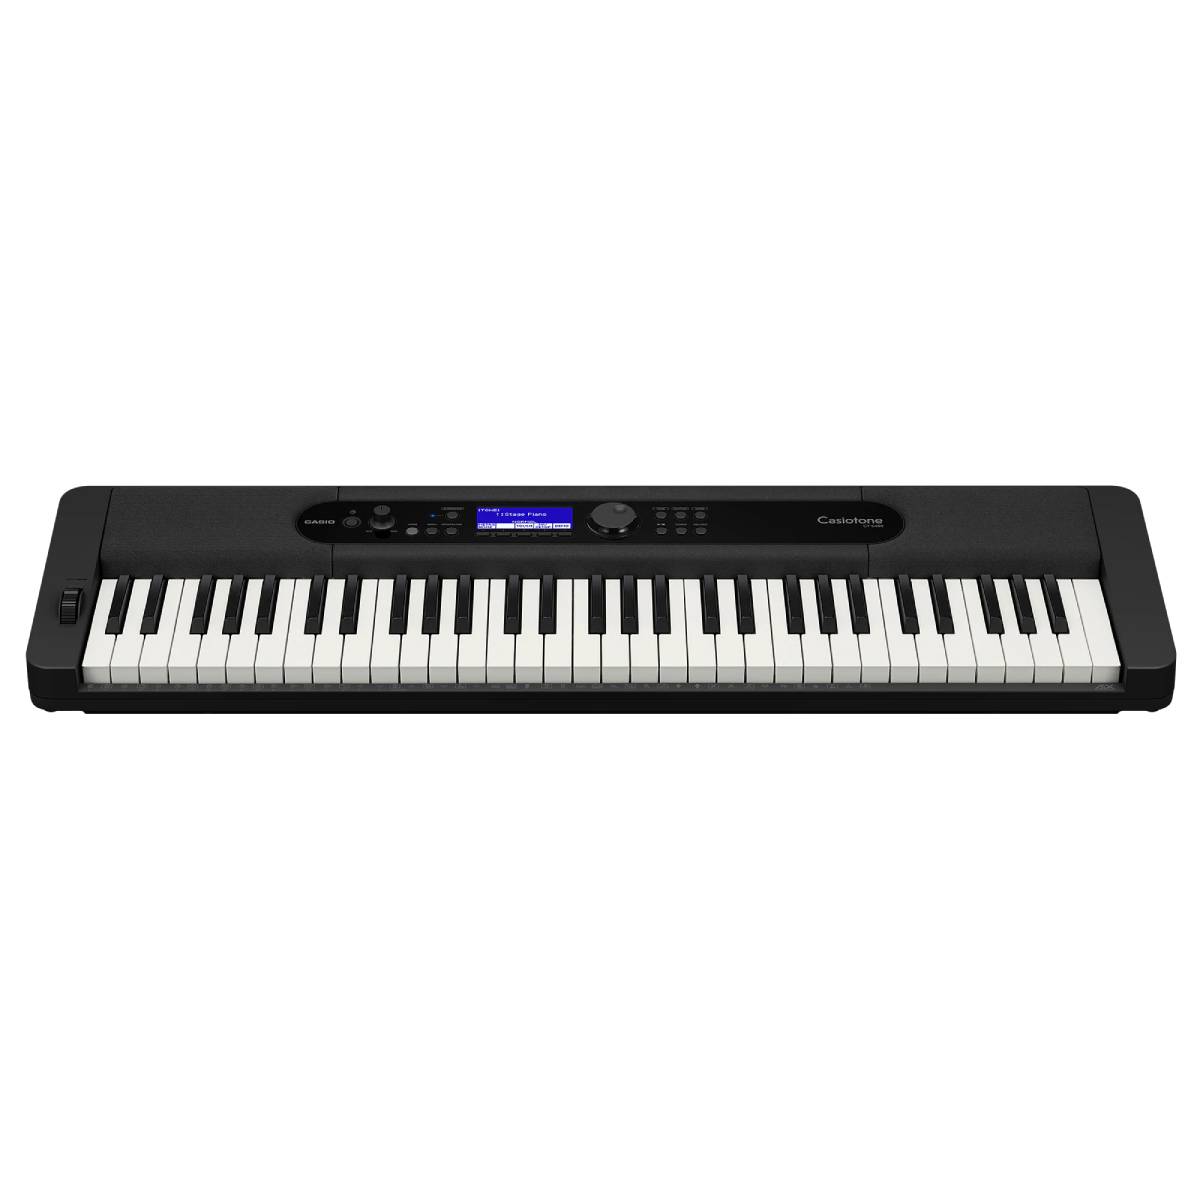 CASIO Casiotone CT-S400 新品[カシオ][CTS400][61key][Digital Piano,keyboard][キーボード,電子ピアノ][Black,ブラック,黒]